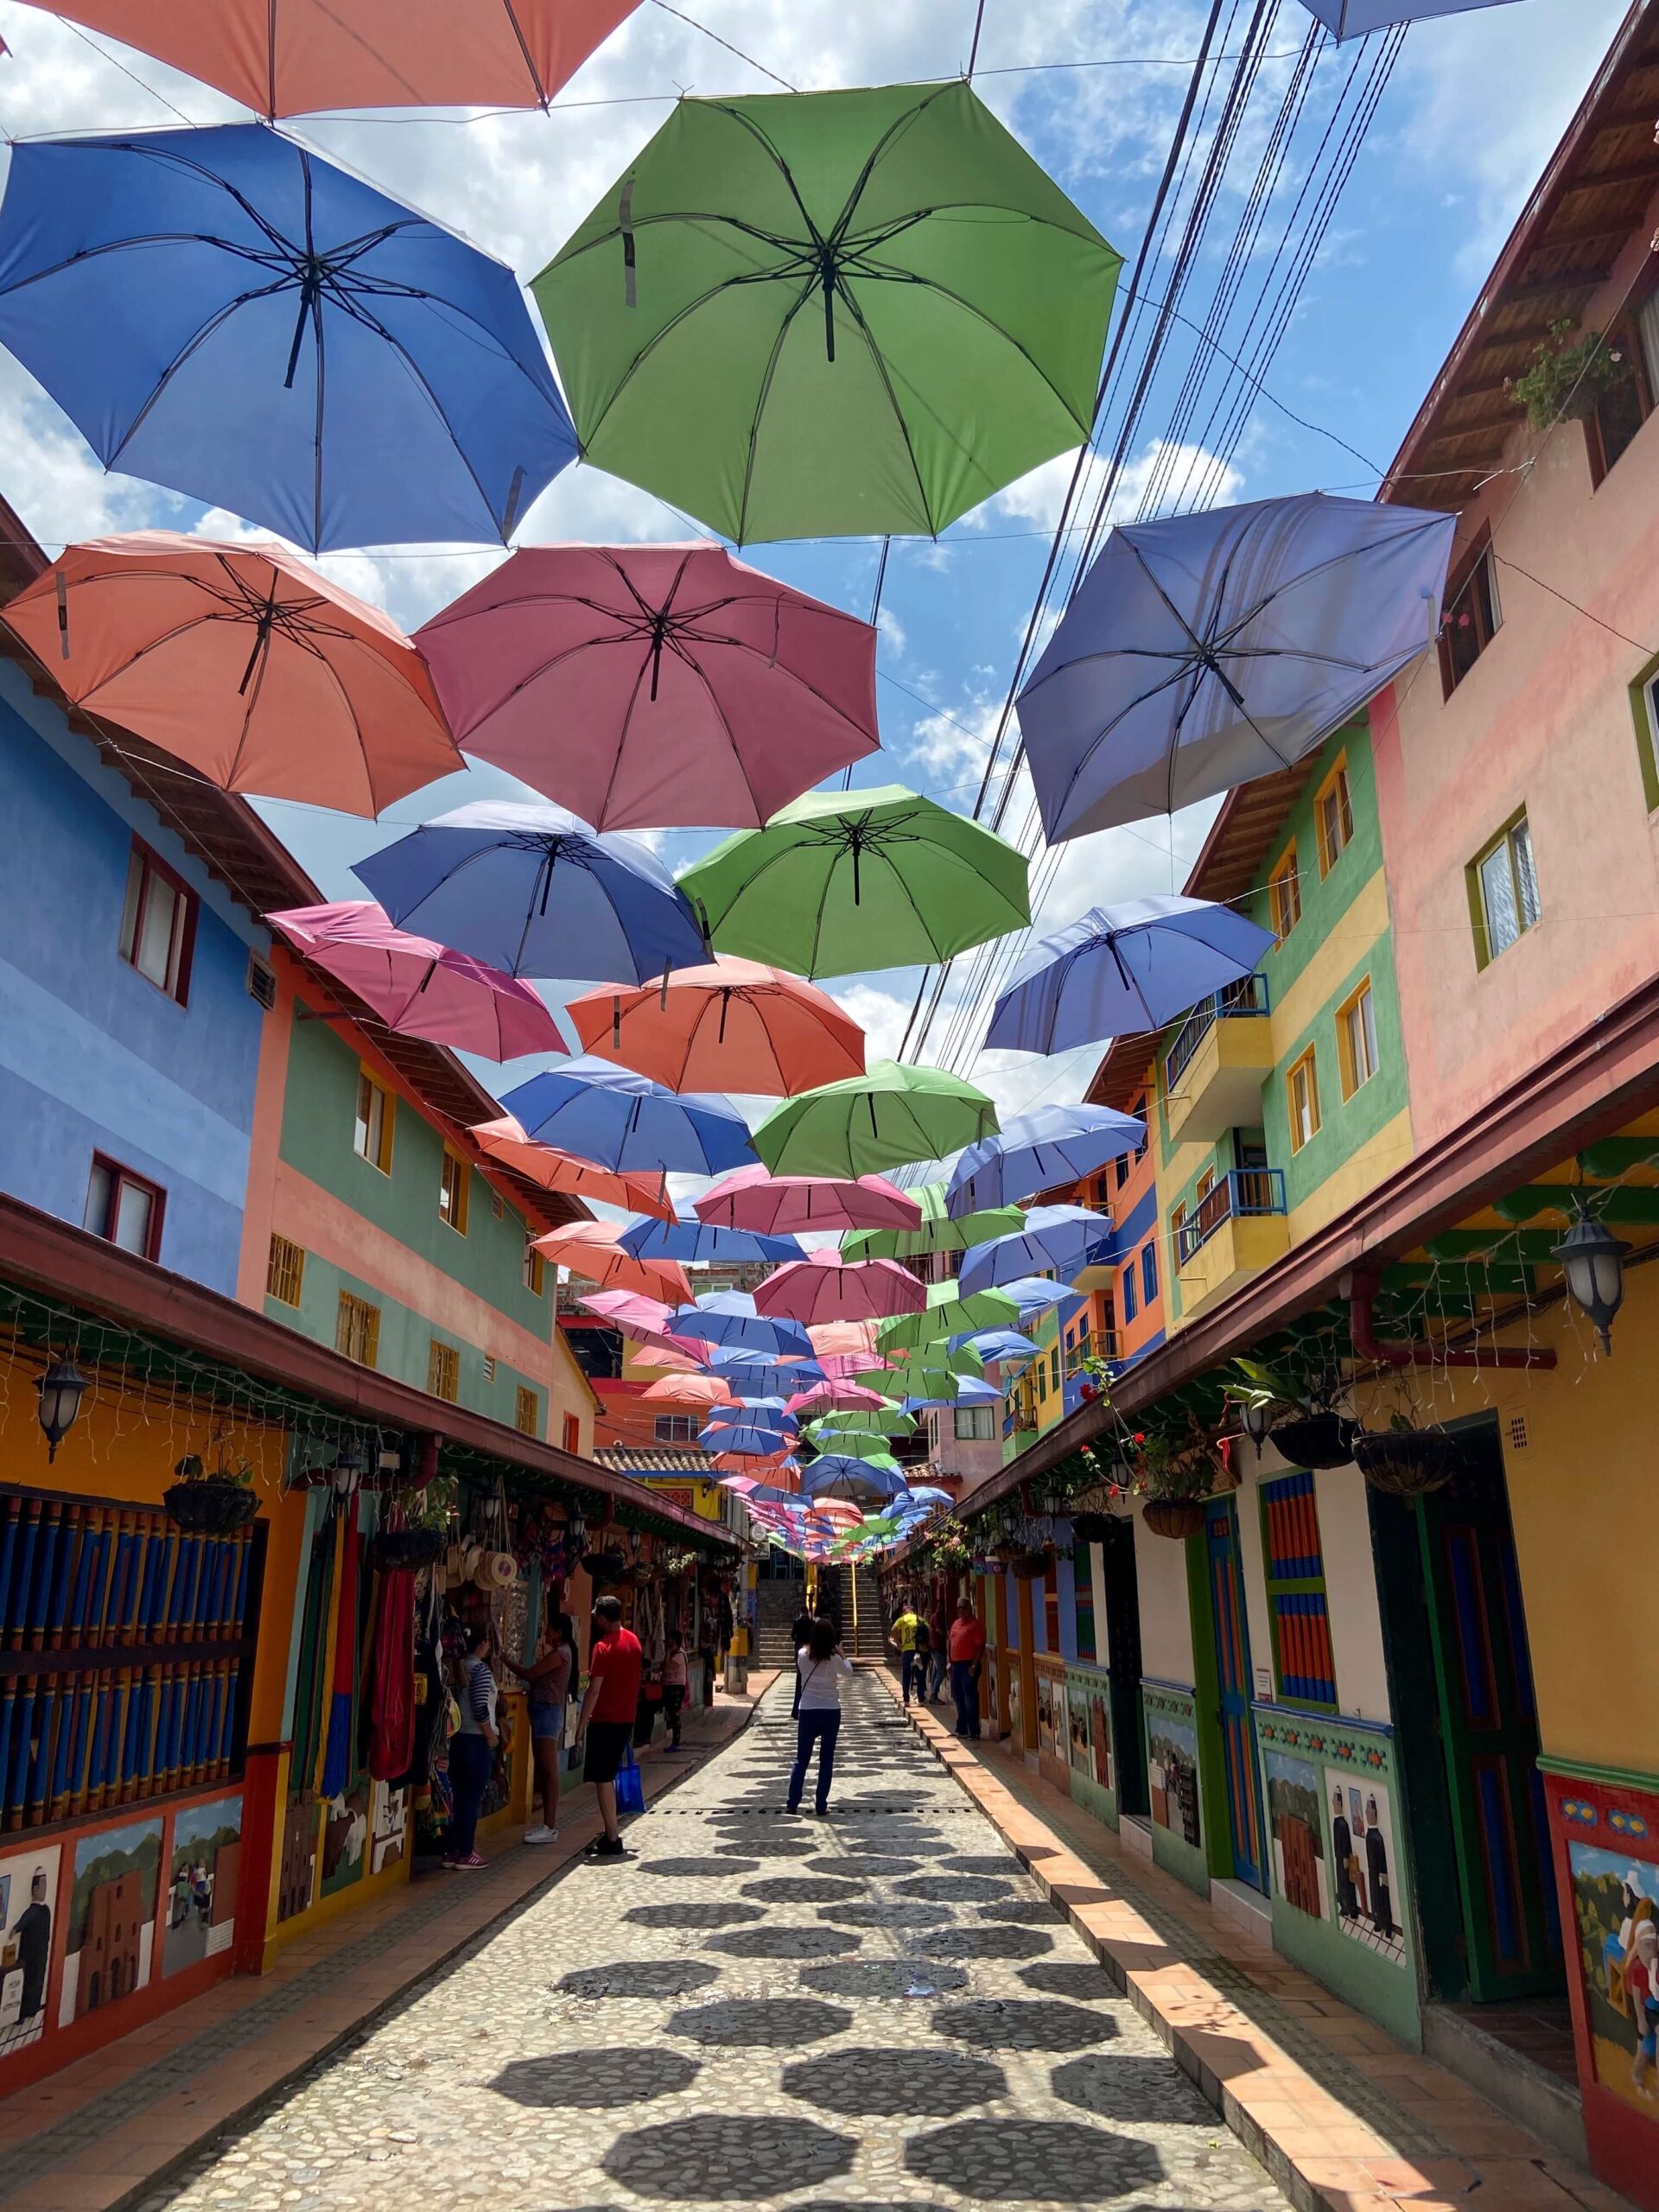 Colourful umbrellas hanging above the street leading to Plazoleta de Los Zócalos